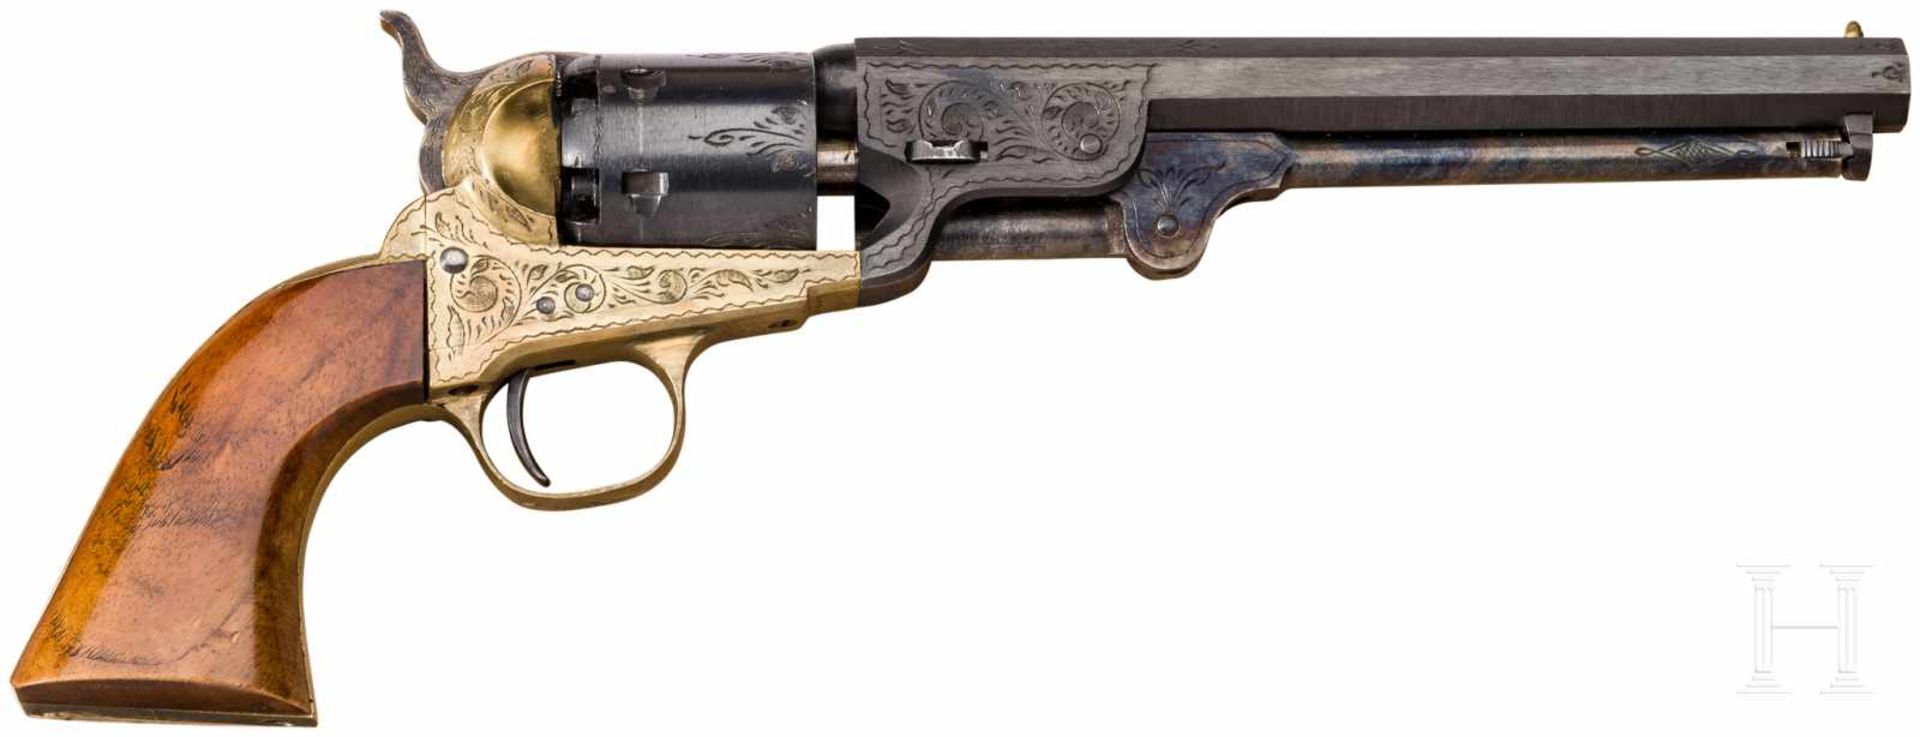 Colt Mod. 1861 Navy, ItalienKal. .36 Blackpowder, Nr. 41819, Blanker Oktagonallauf, Länge 7-1/2".